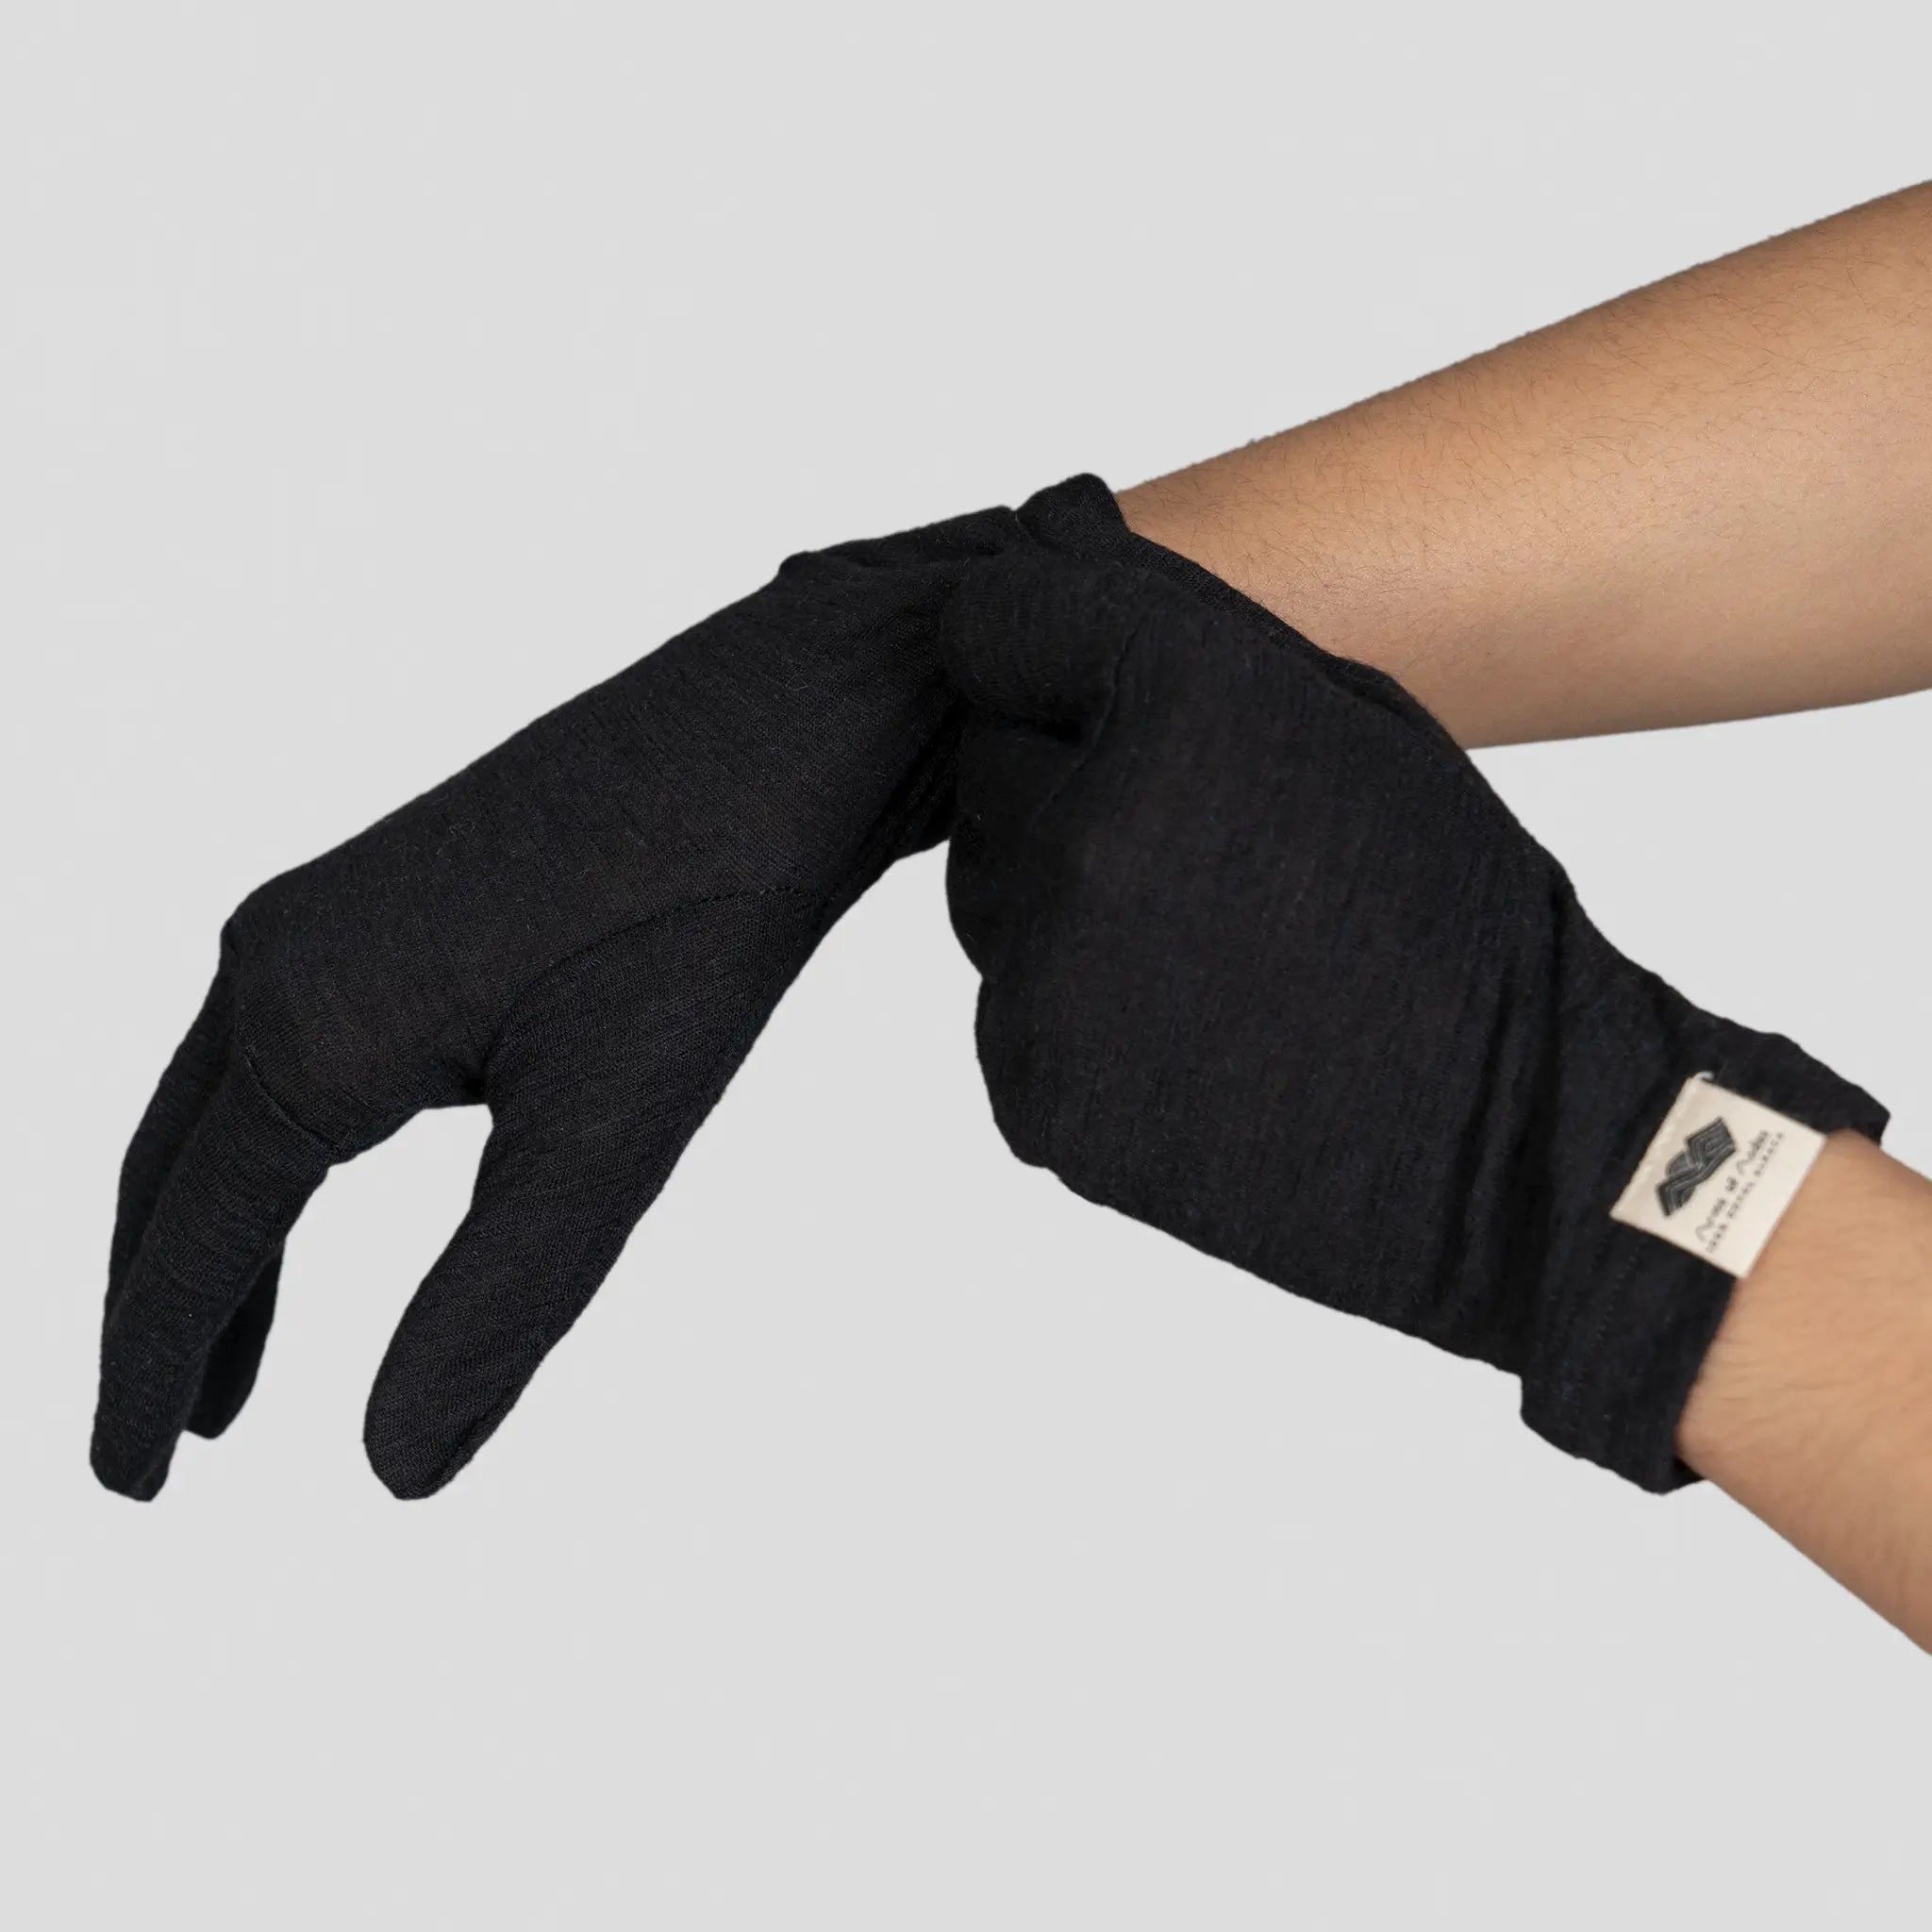 Evolution Knitwear Wool Knit Fingerless Gloves for Men - Made in The USA - Super Soft Merino Wool